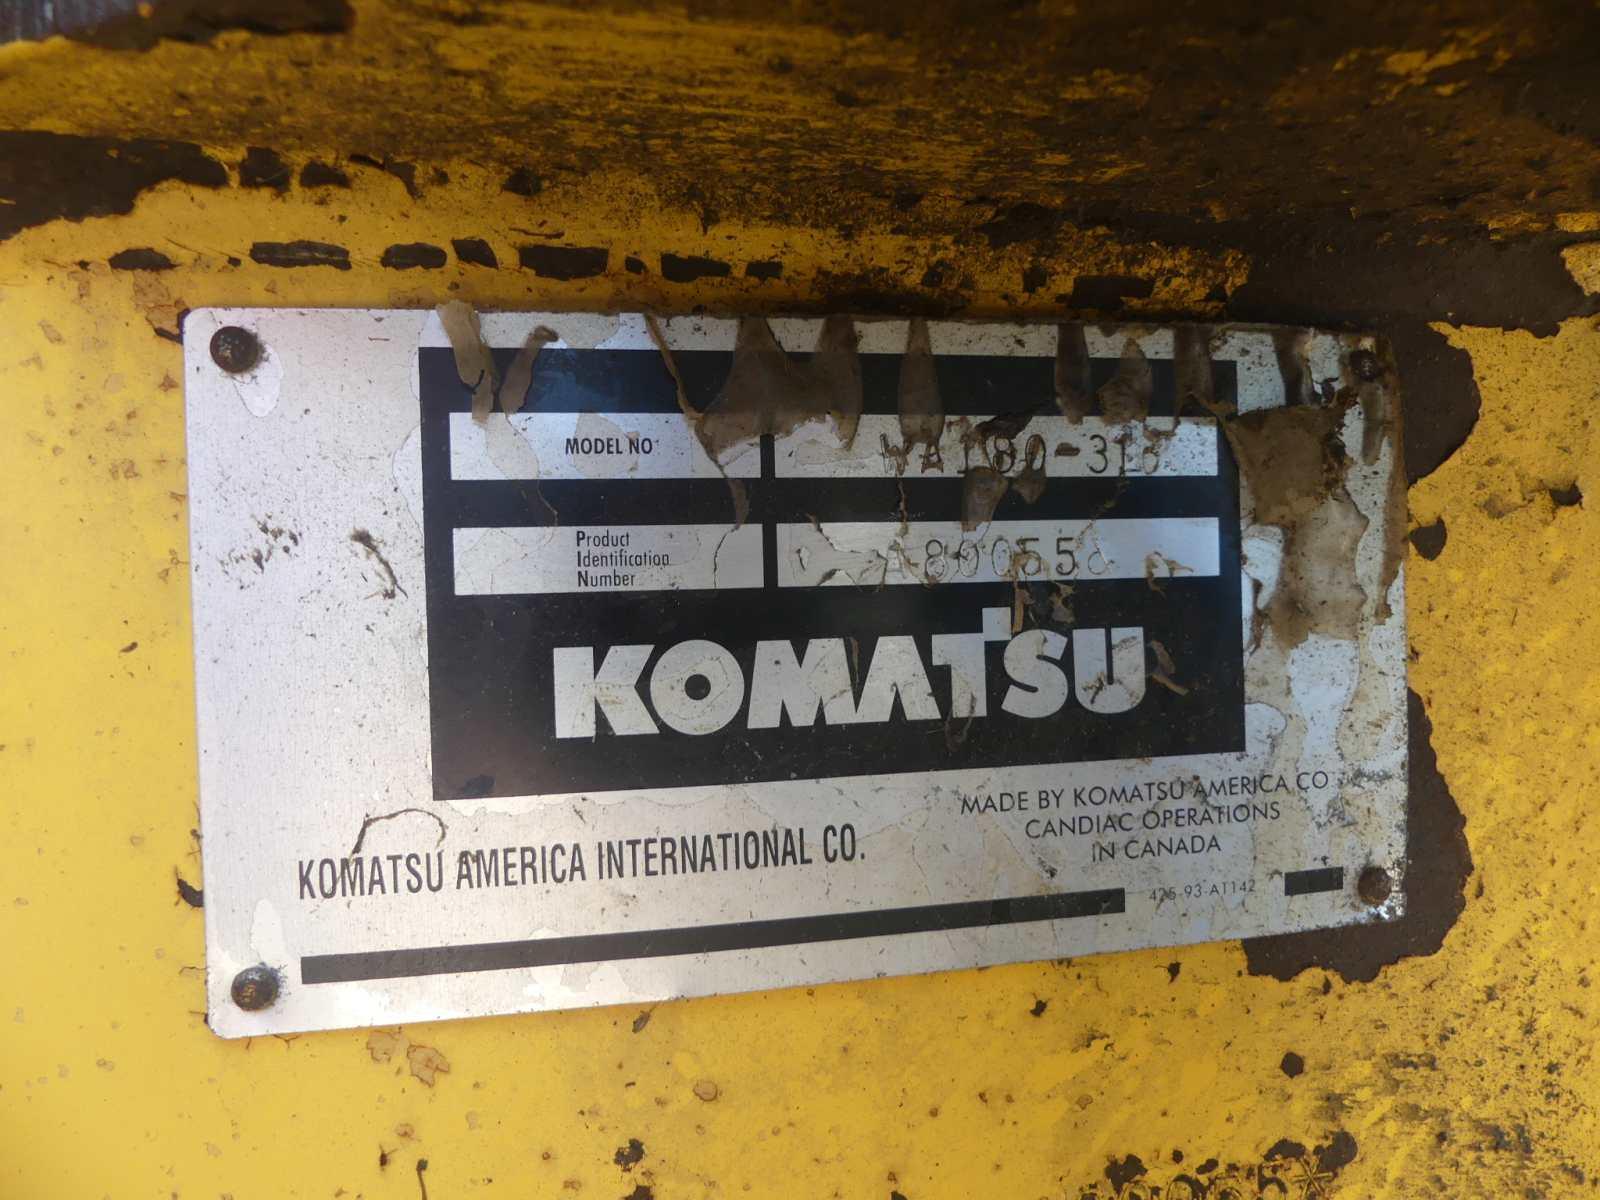 1997 Komatsu WA180-3L Rubber-tired Loader, s/n A80055: Encl. Cab, GP Bkt.,